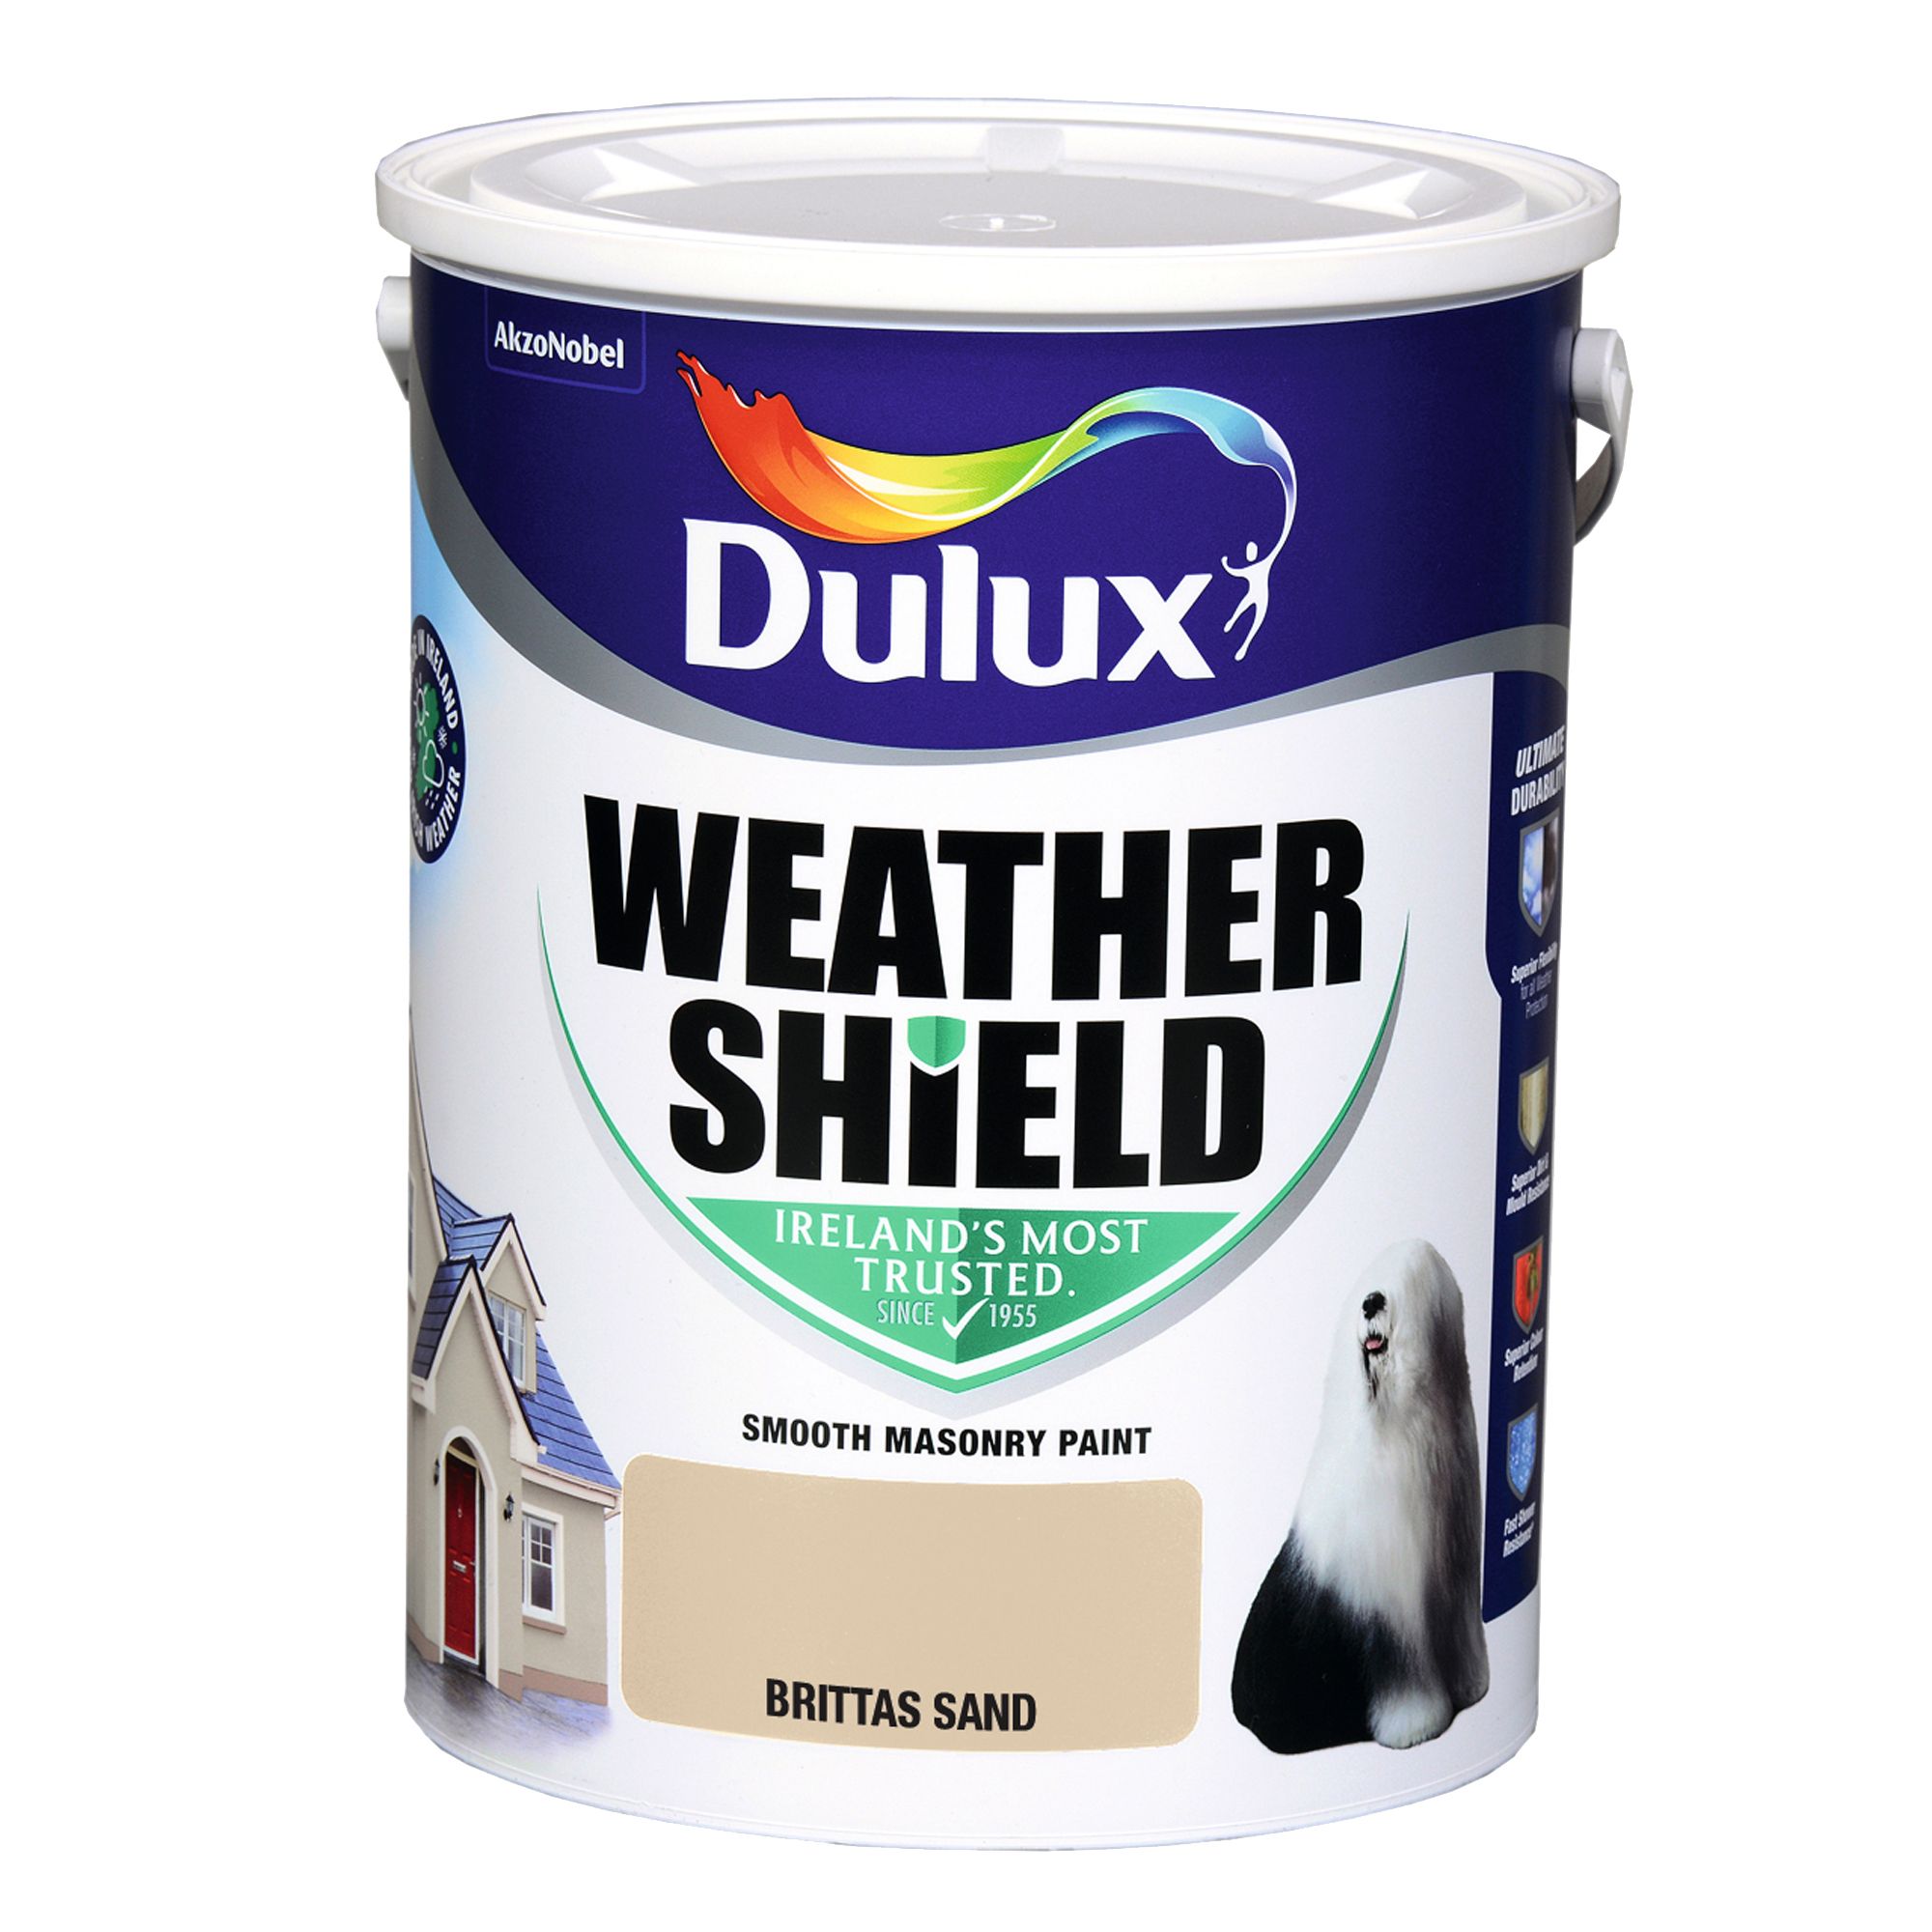 Dulux Weathershield Brittas sand Smooth Super matt Masonry paint, 5L